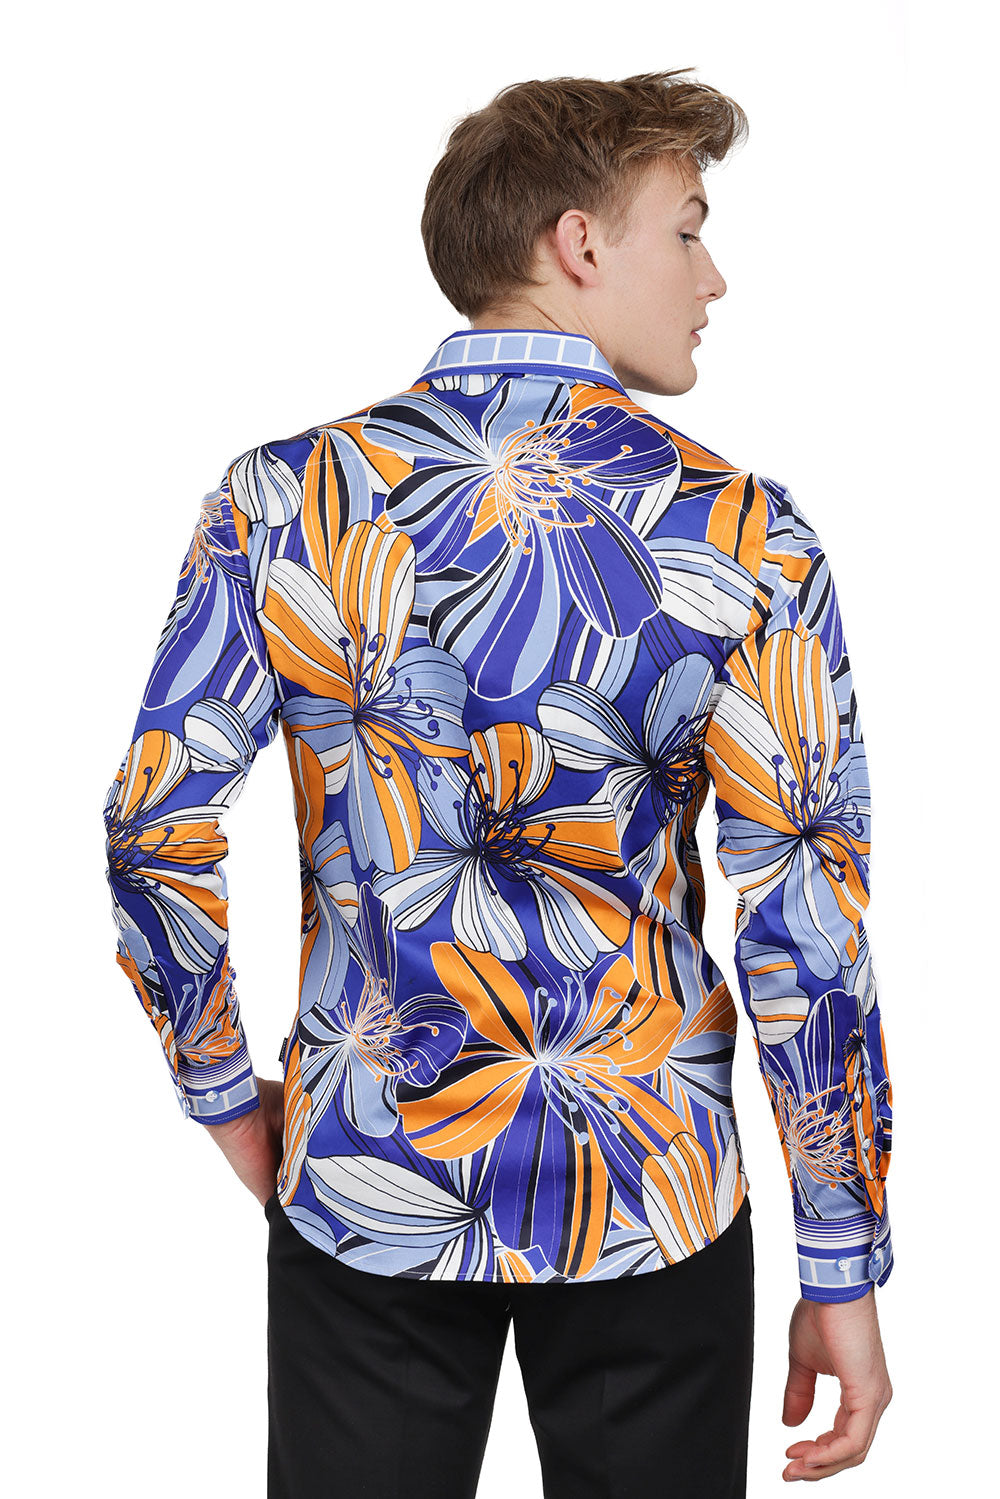 BARABAS Men's Vibrant Floral Print Button Down Long Sleeves Shirt SP08 Blue